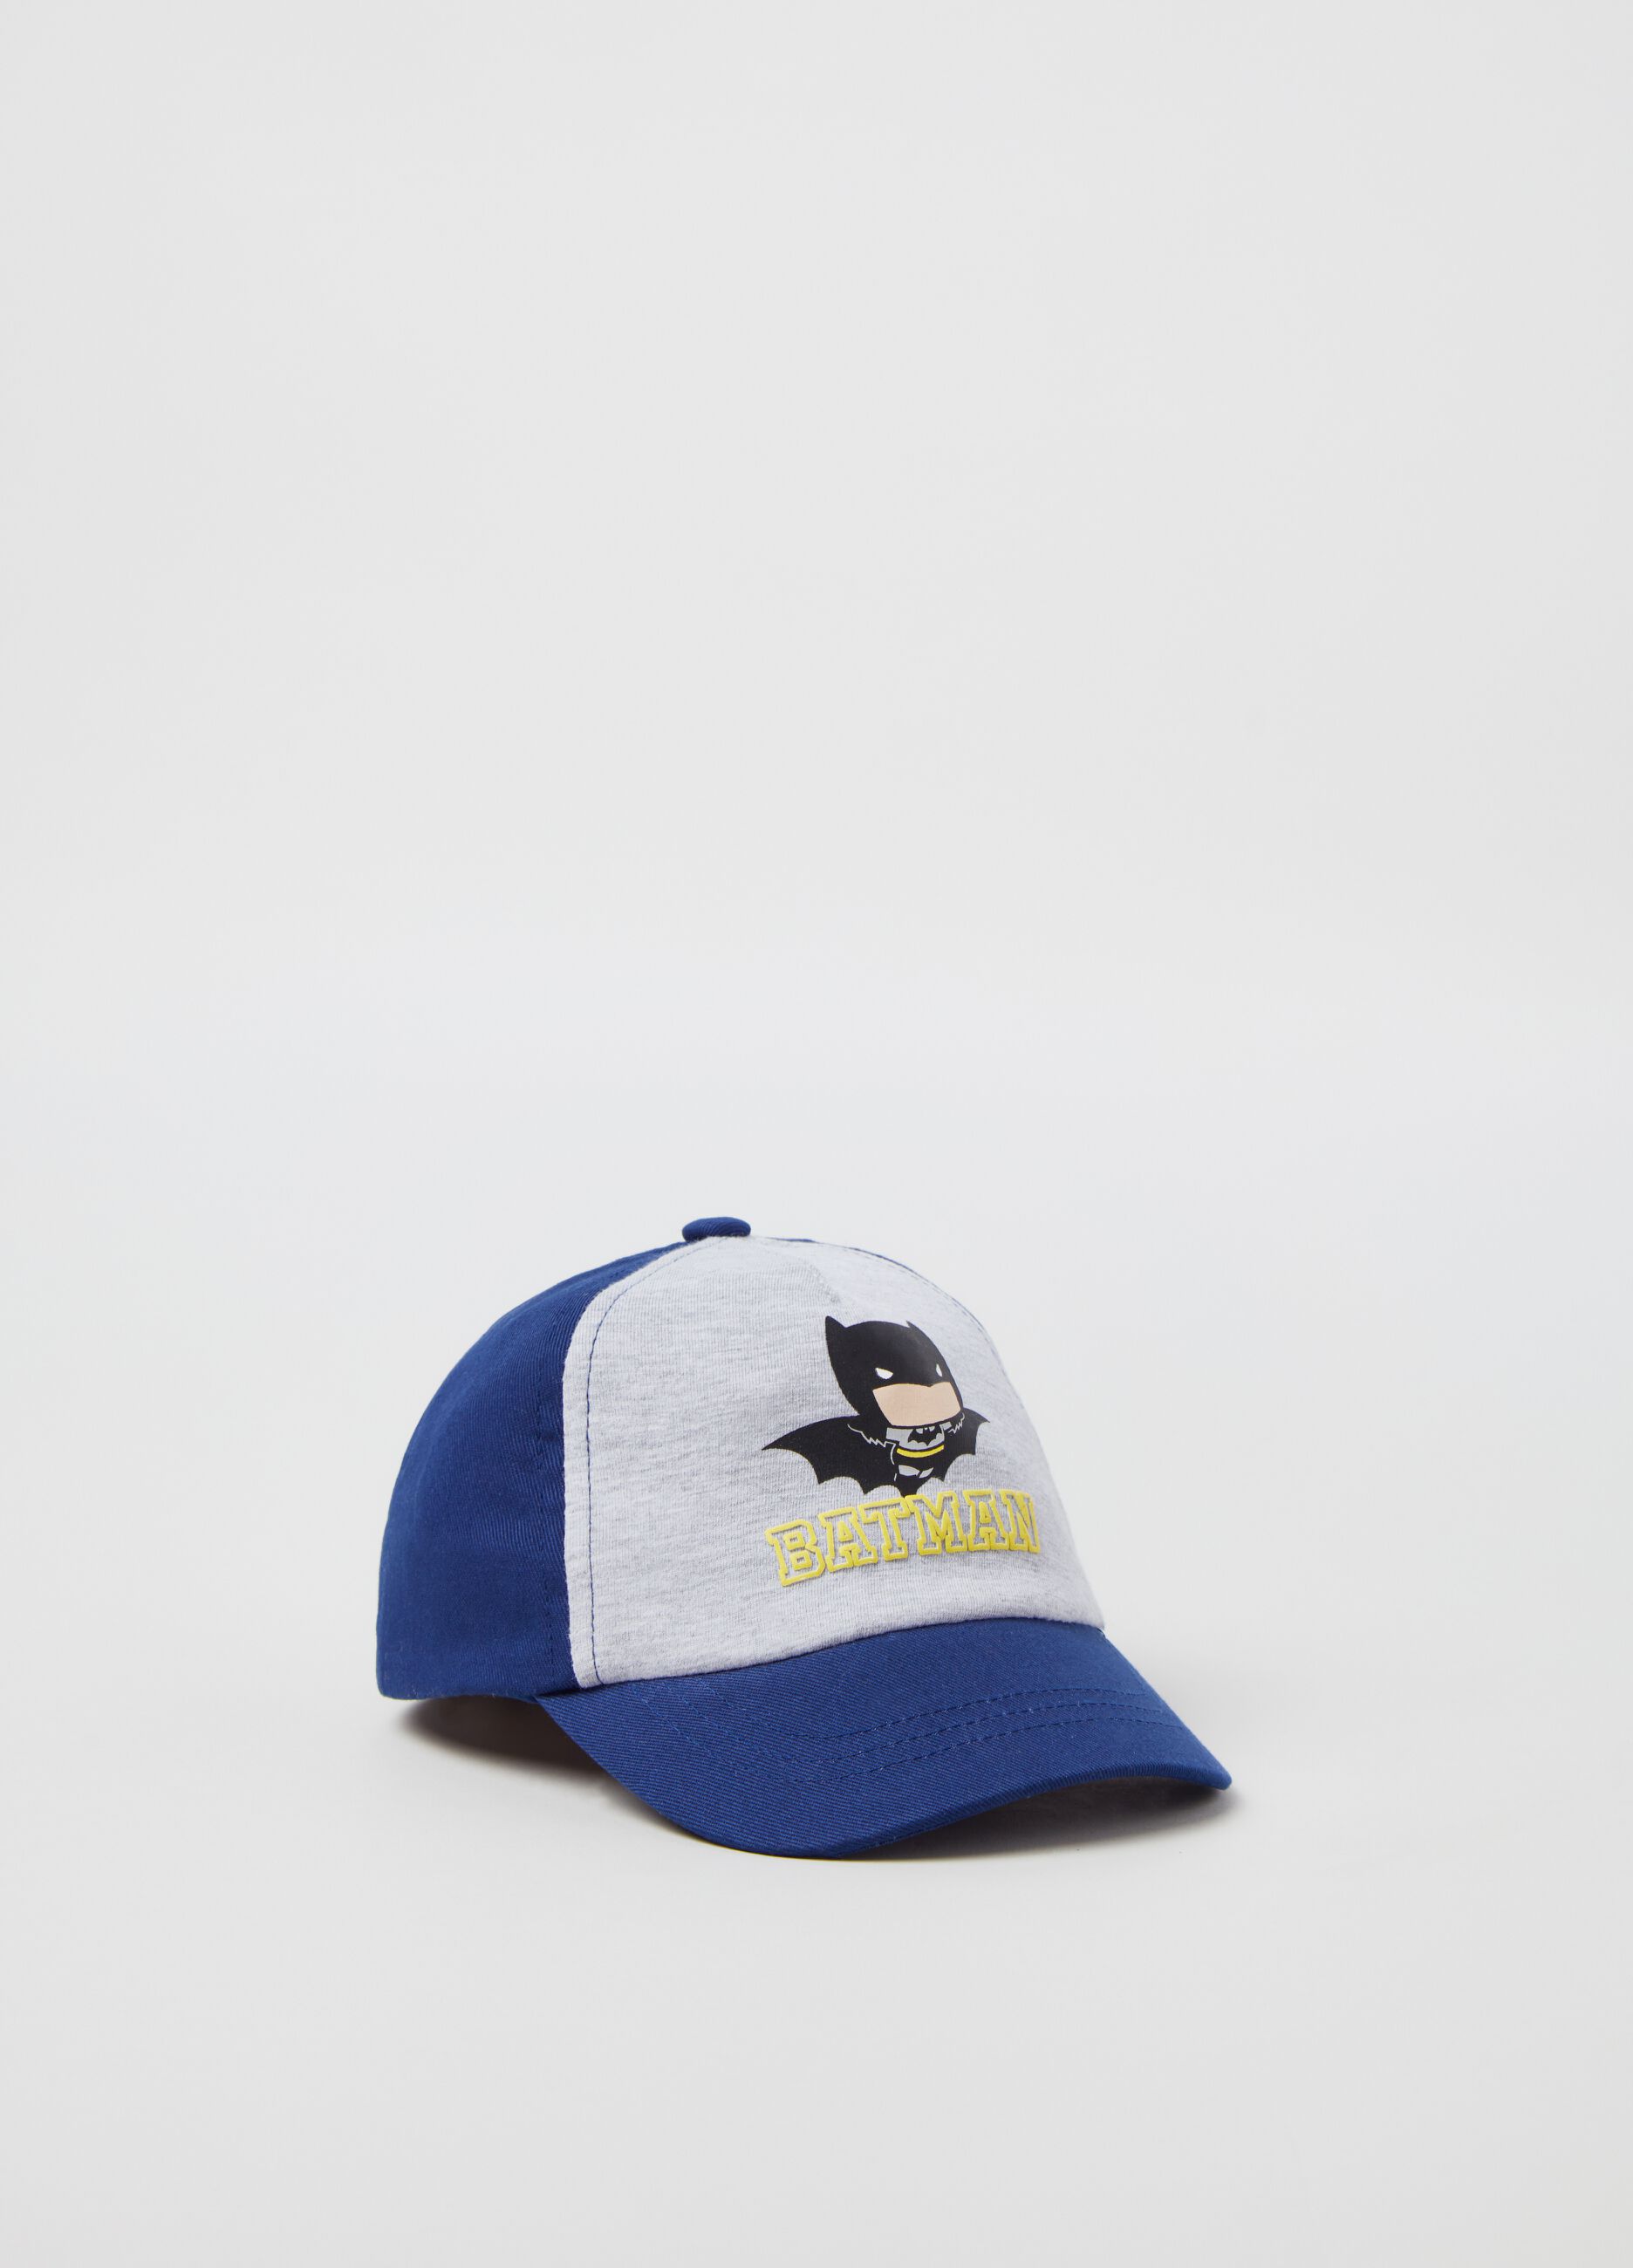 Baseball cap with Batman print